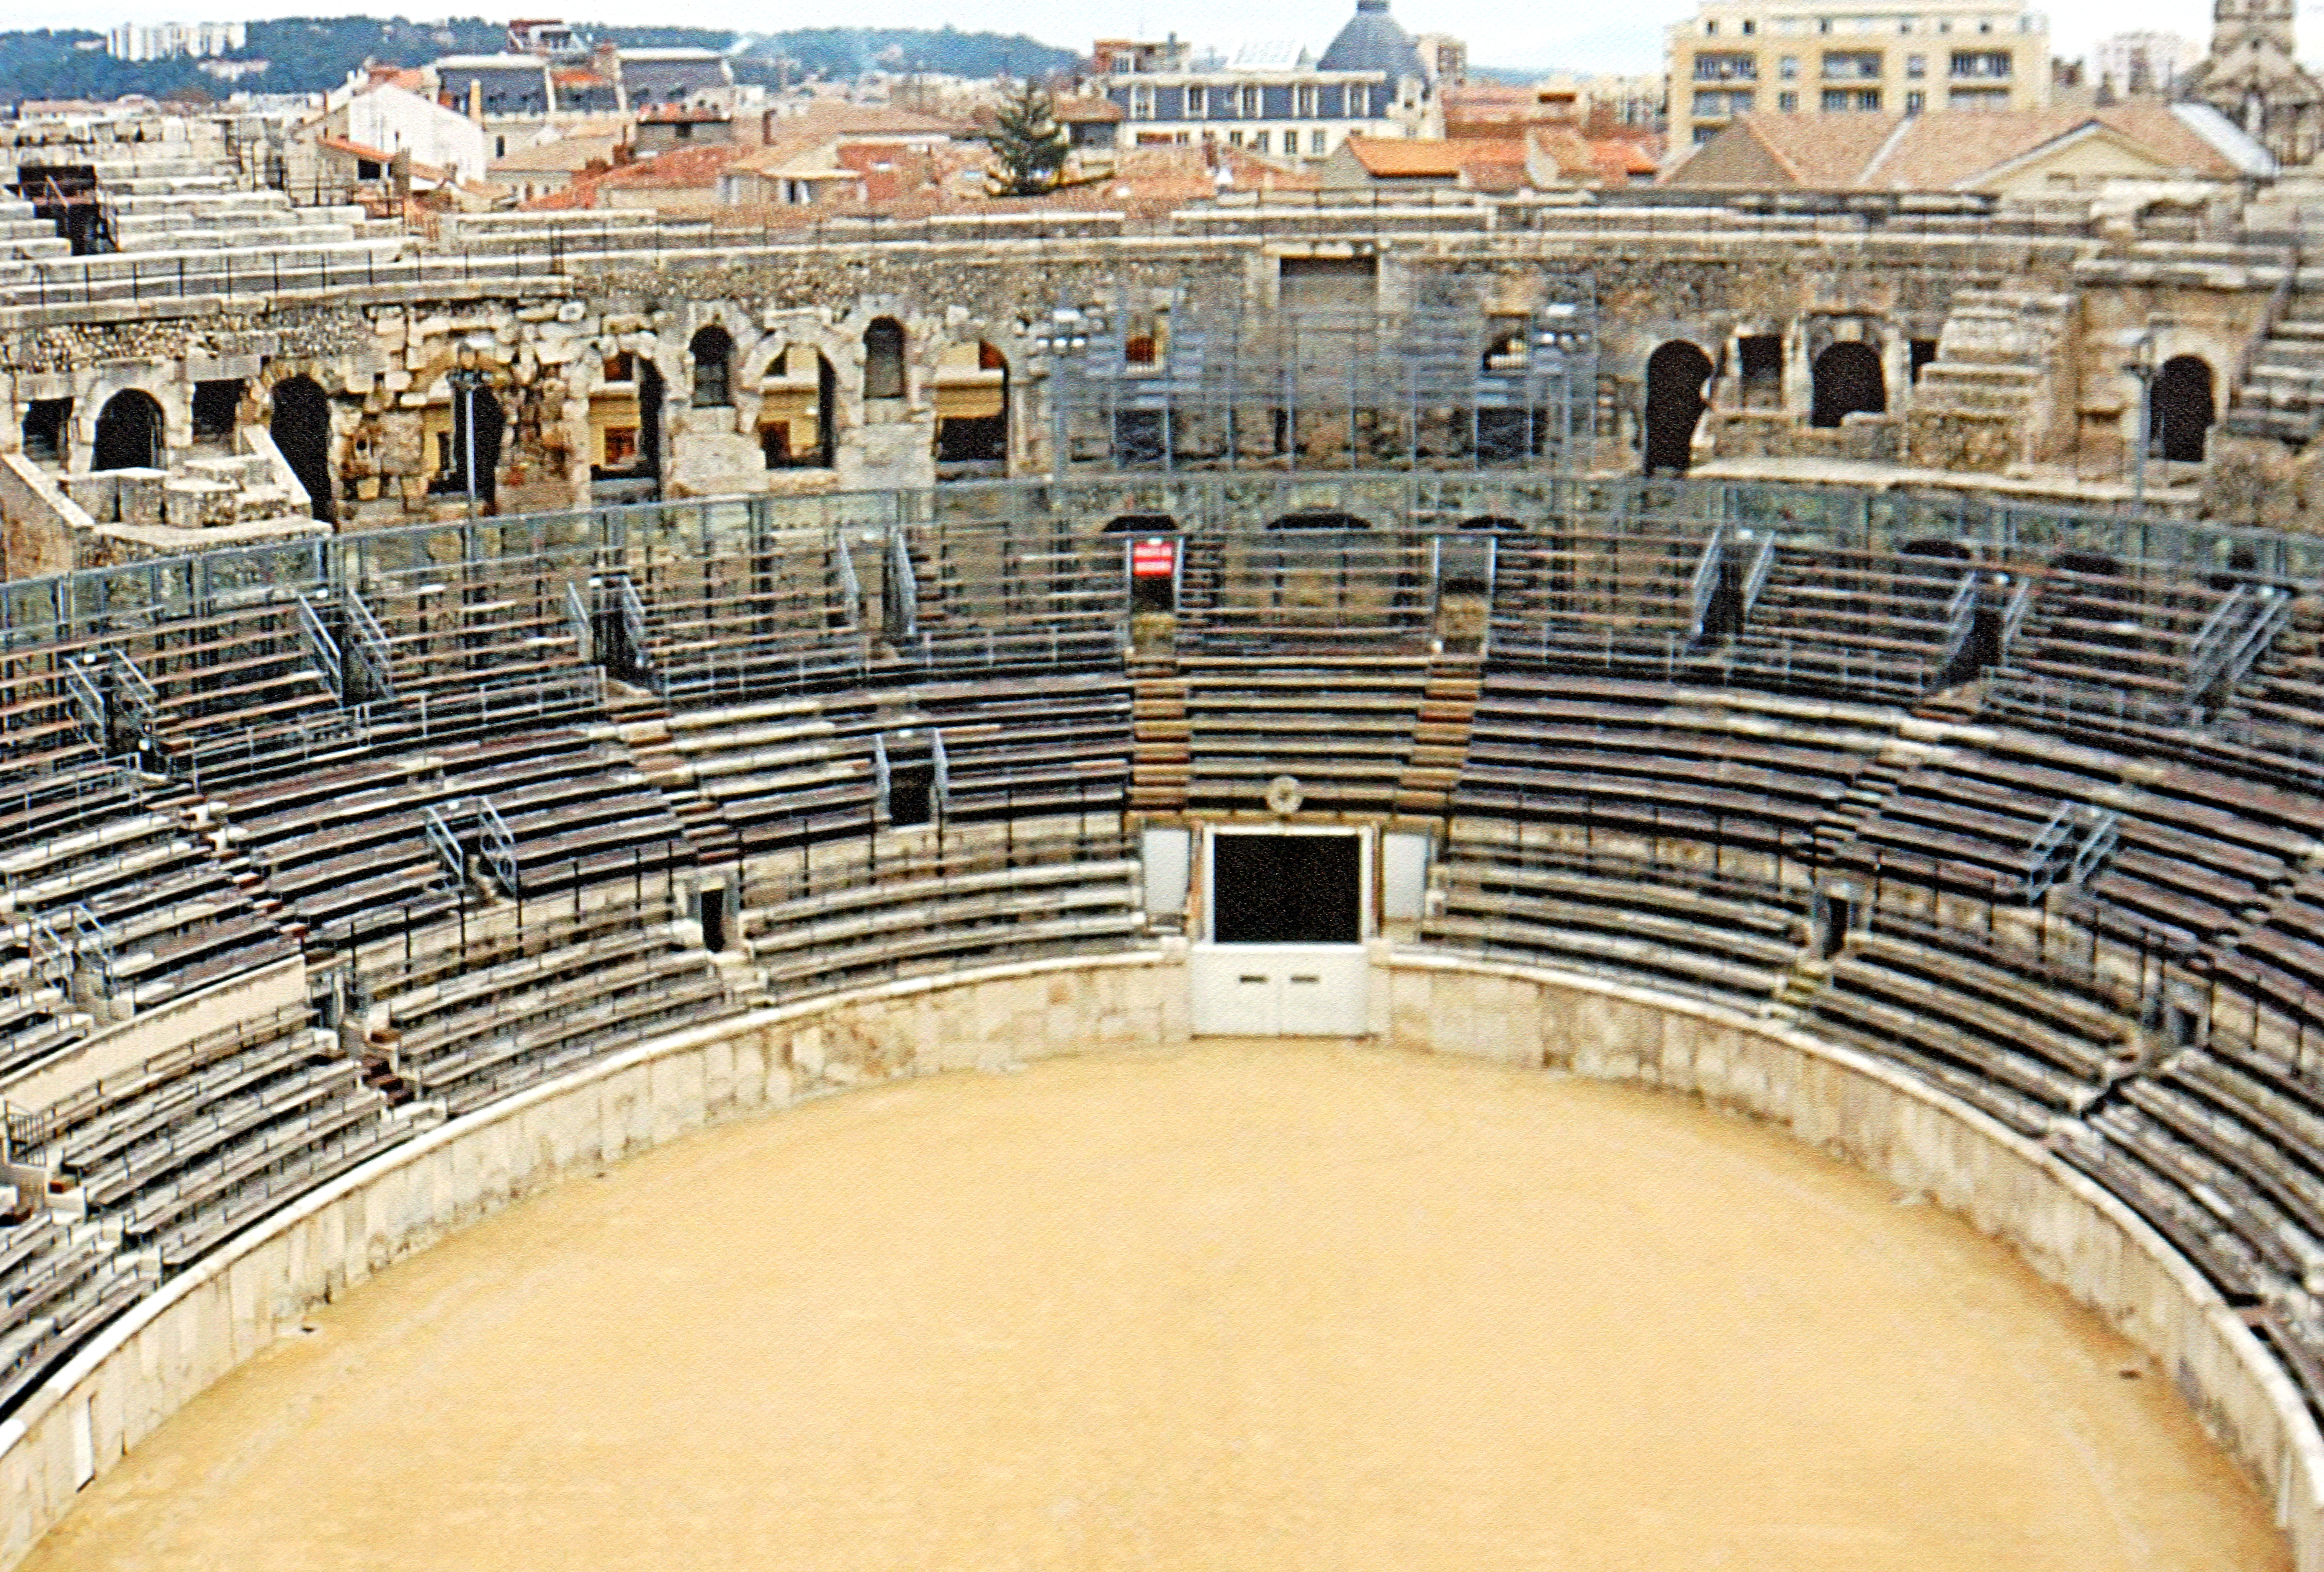 File:France-002368 - Inside Amphitheatre (15681602729).jpg ...